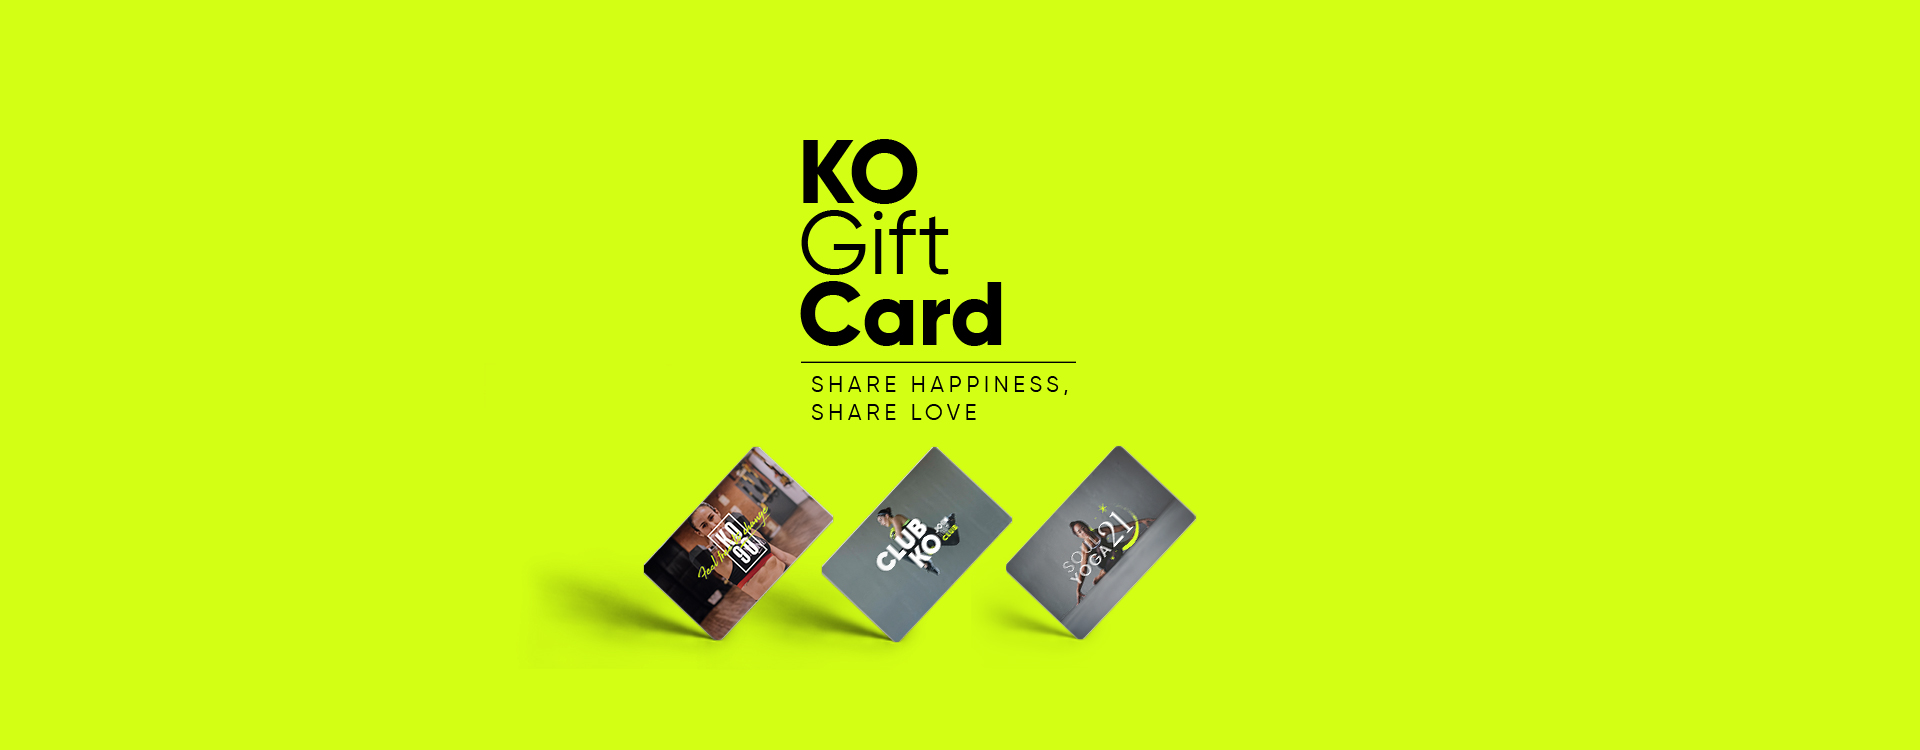 KO Gift Card